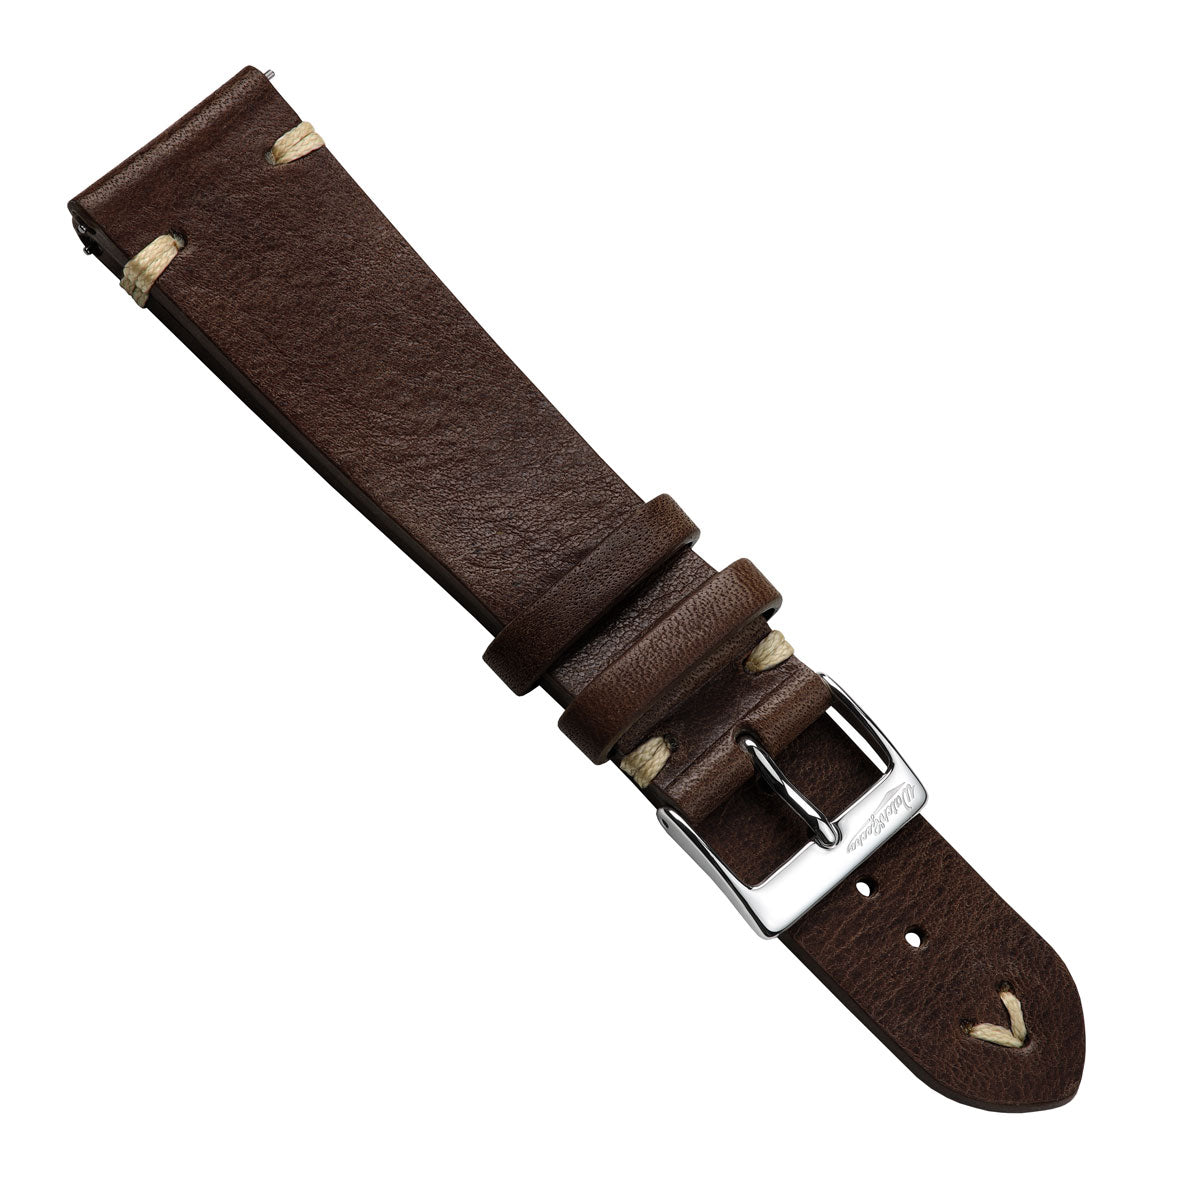 Classic Simple Handmade Italian Leather Watch Strap - Chocolate Brown